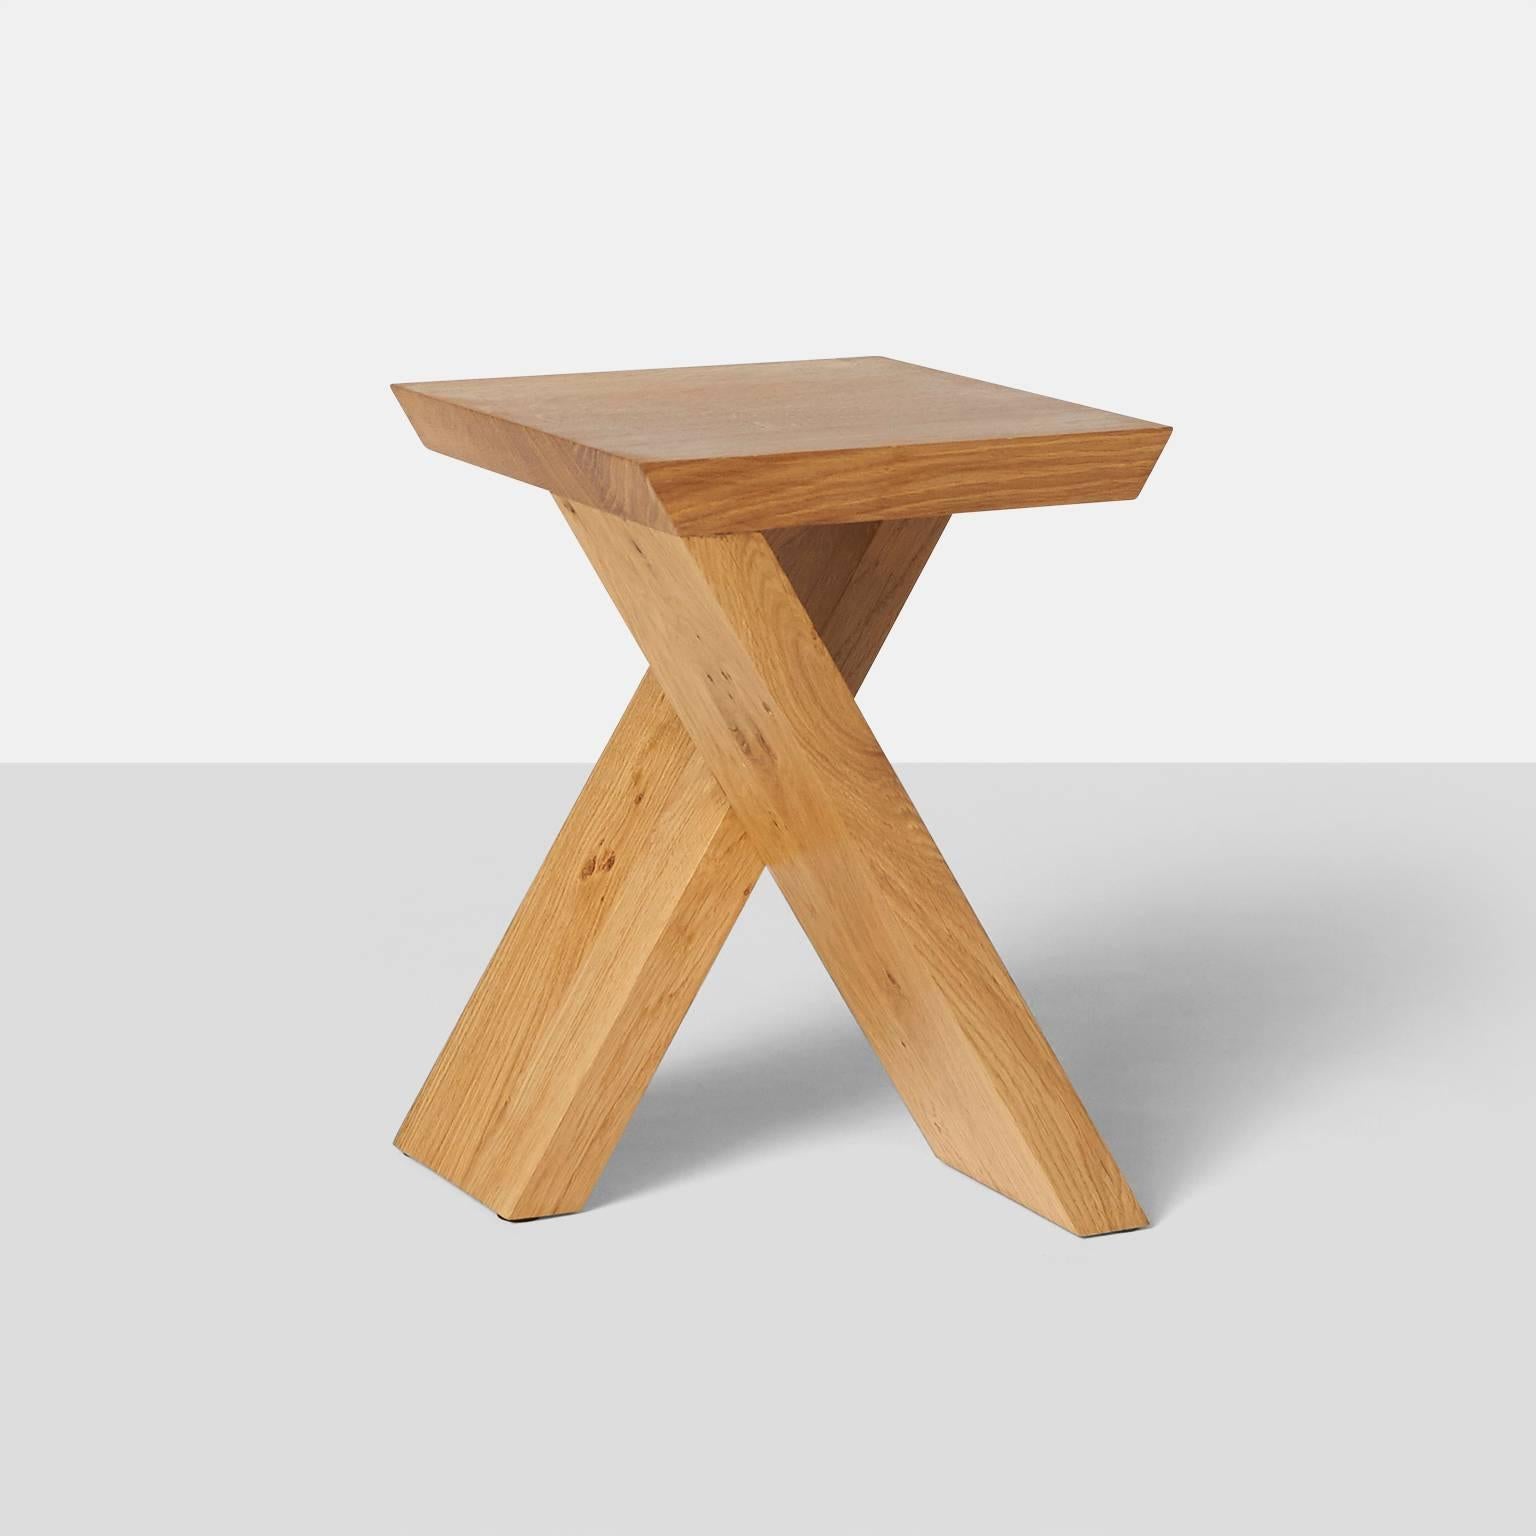 Organic Modern Hocker #7 Tables by Kaspar Hamacher